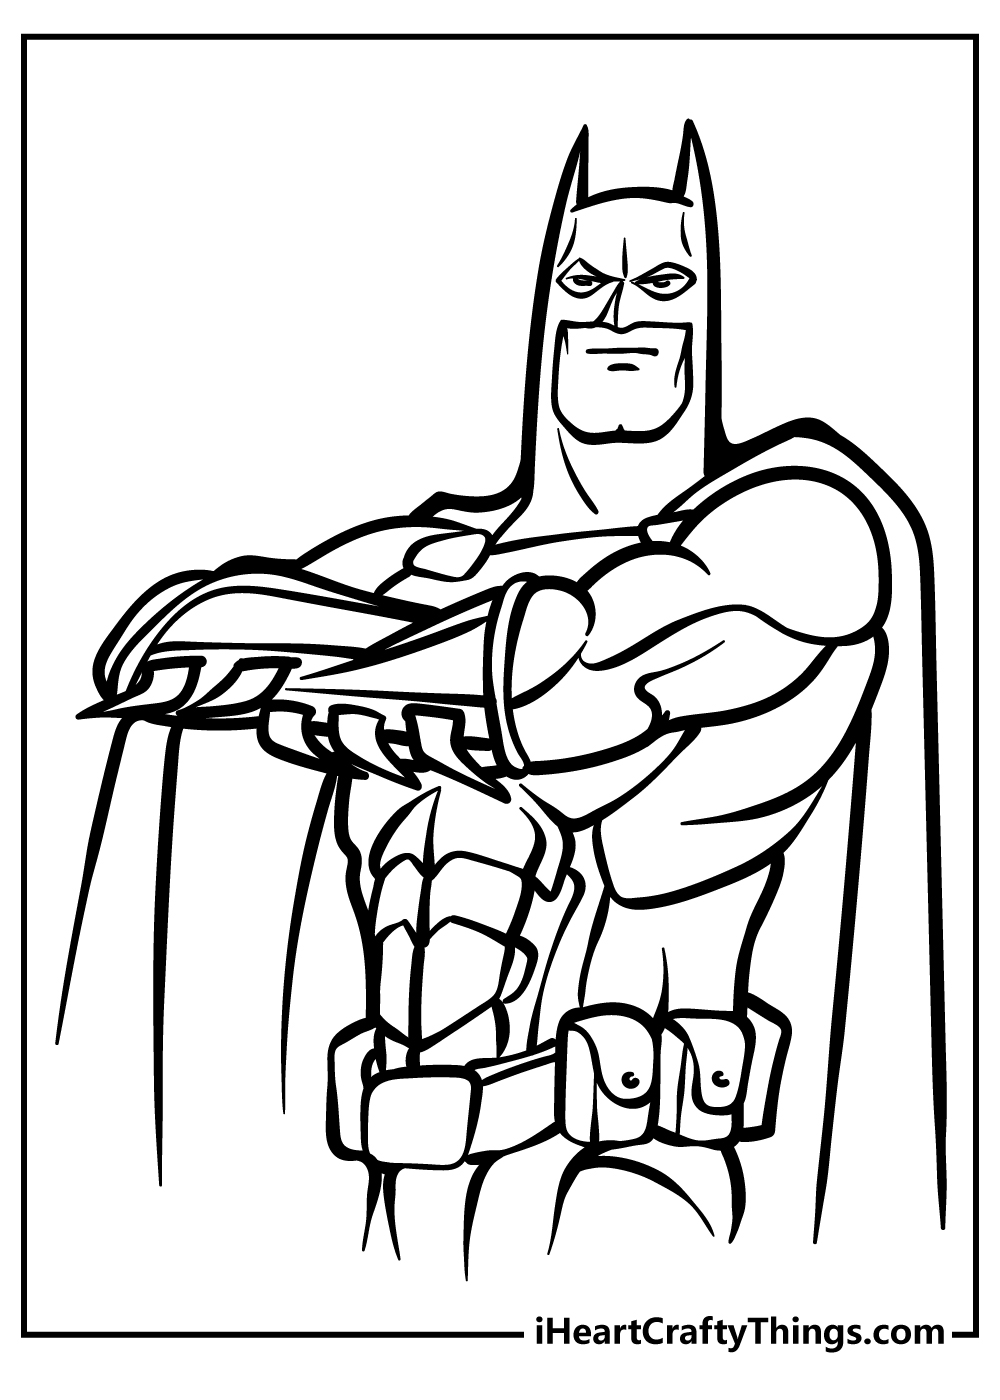 Batman coloring pages free printables